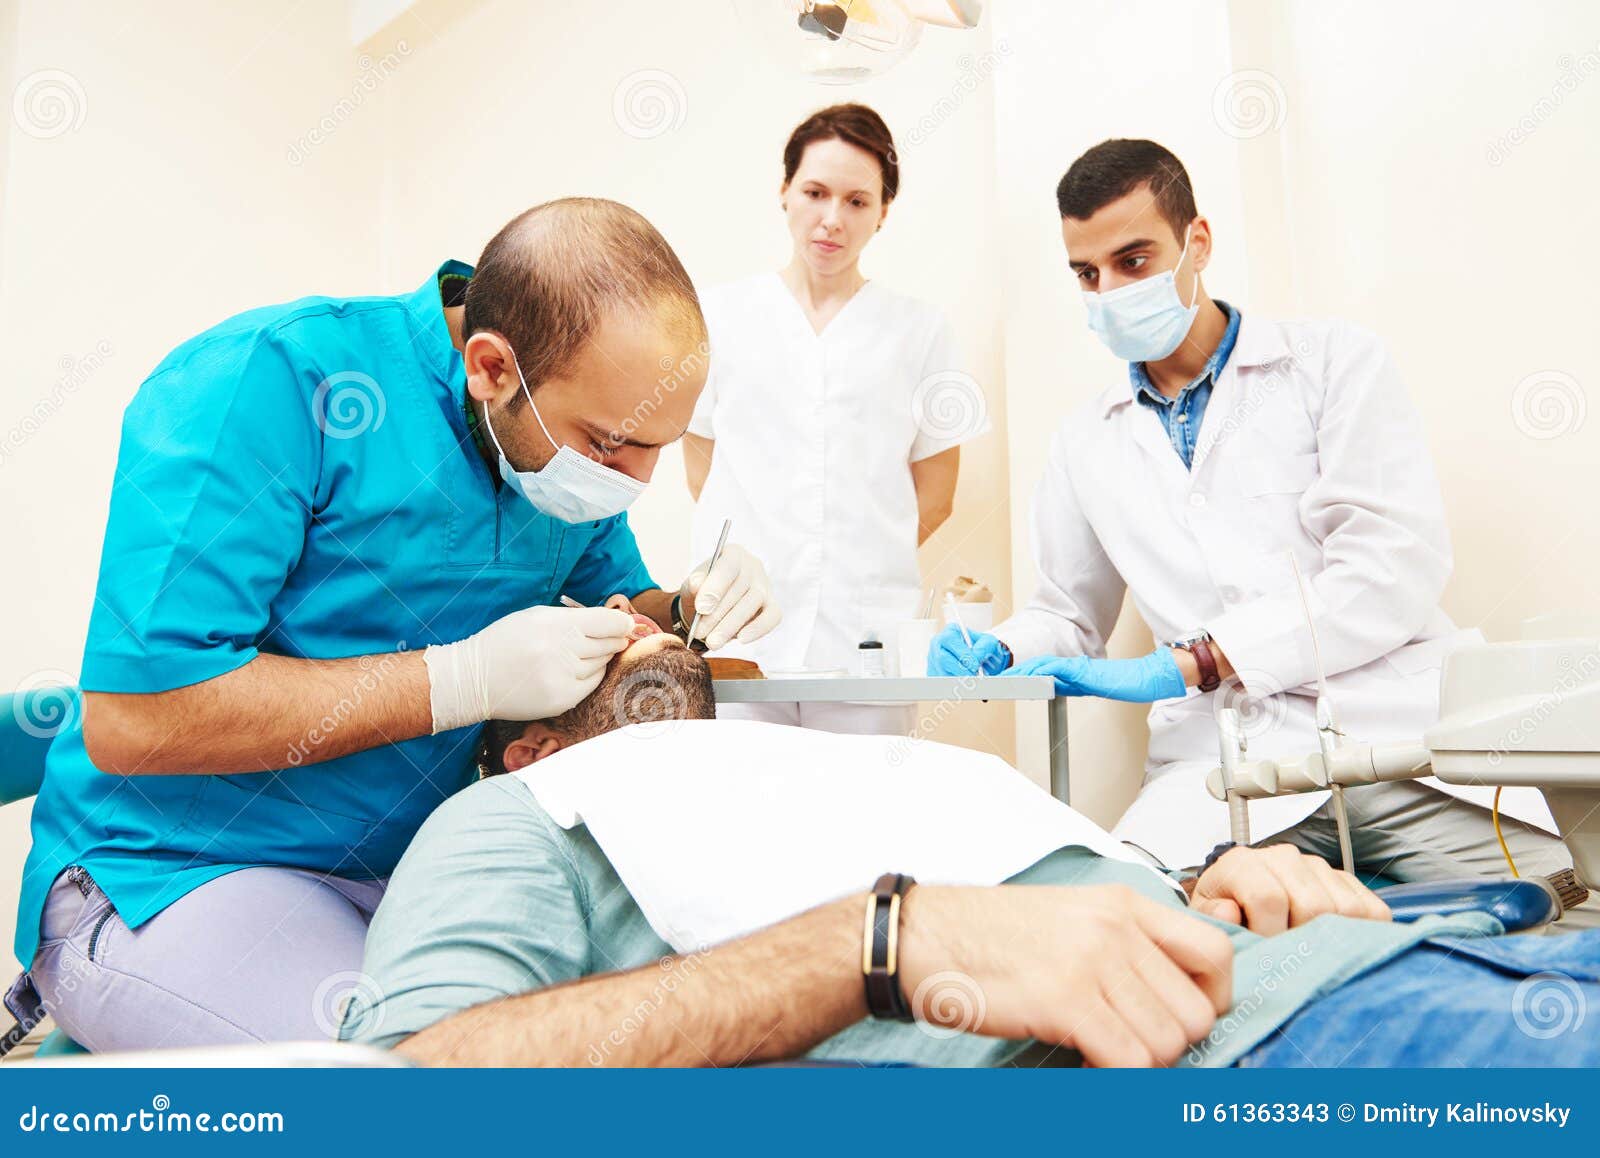 Female Dentist Doctor Teaching Students Stock Image